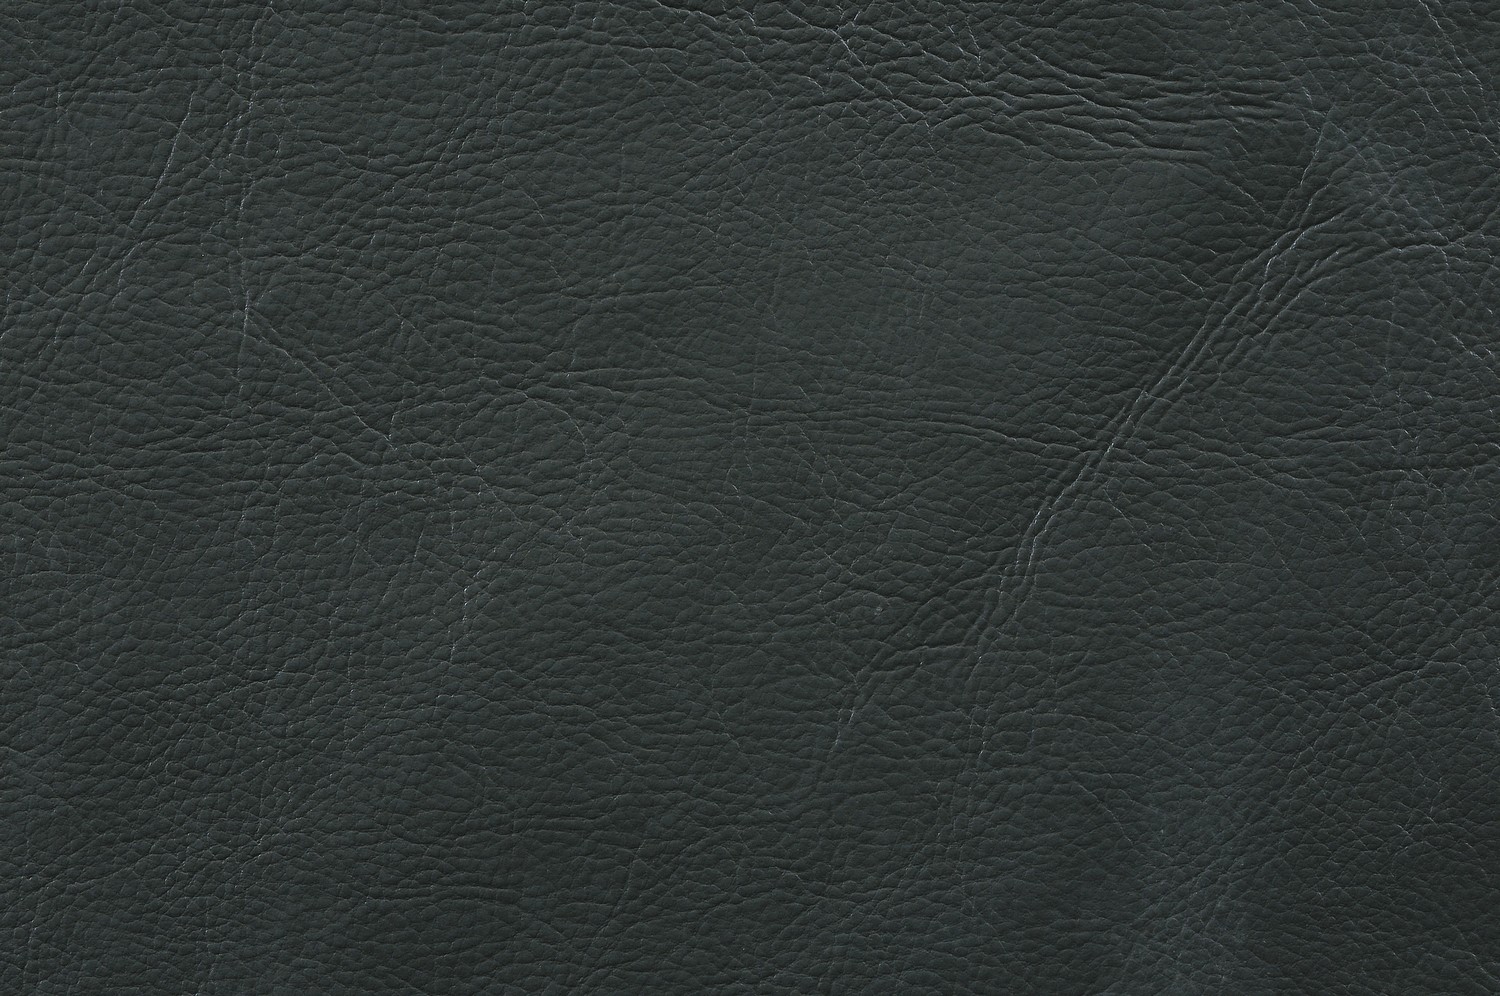 Homelegance Pecos Reclining Sofa Set - Leather Gel Match - Grey